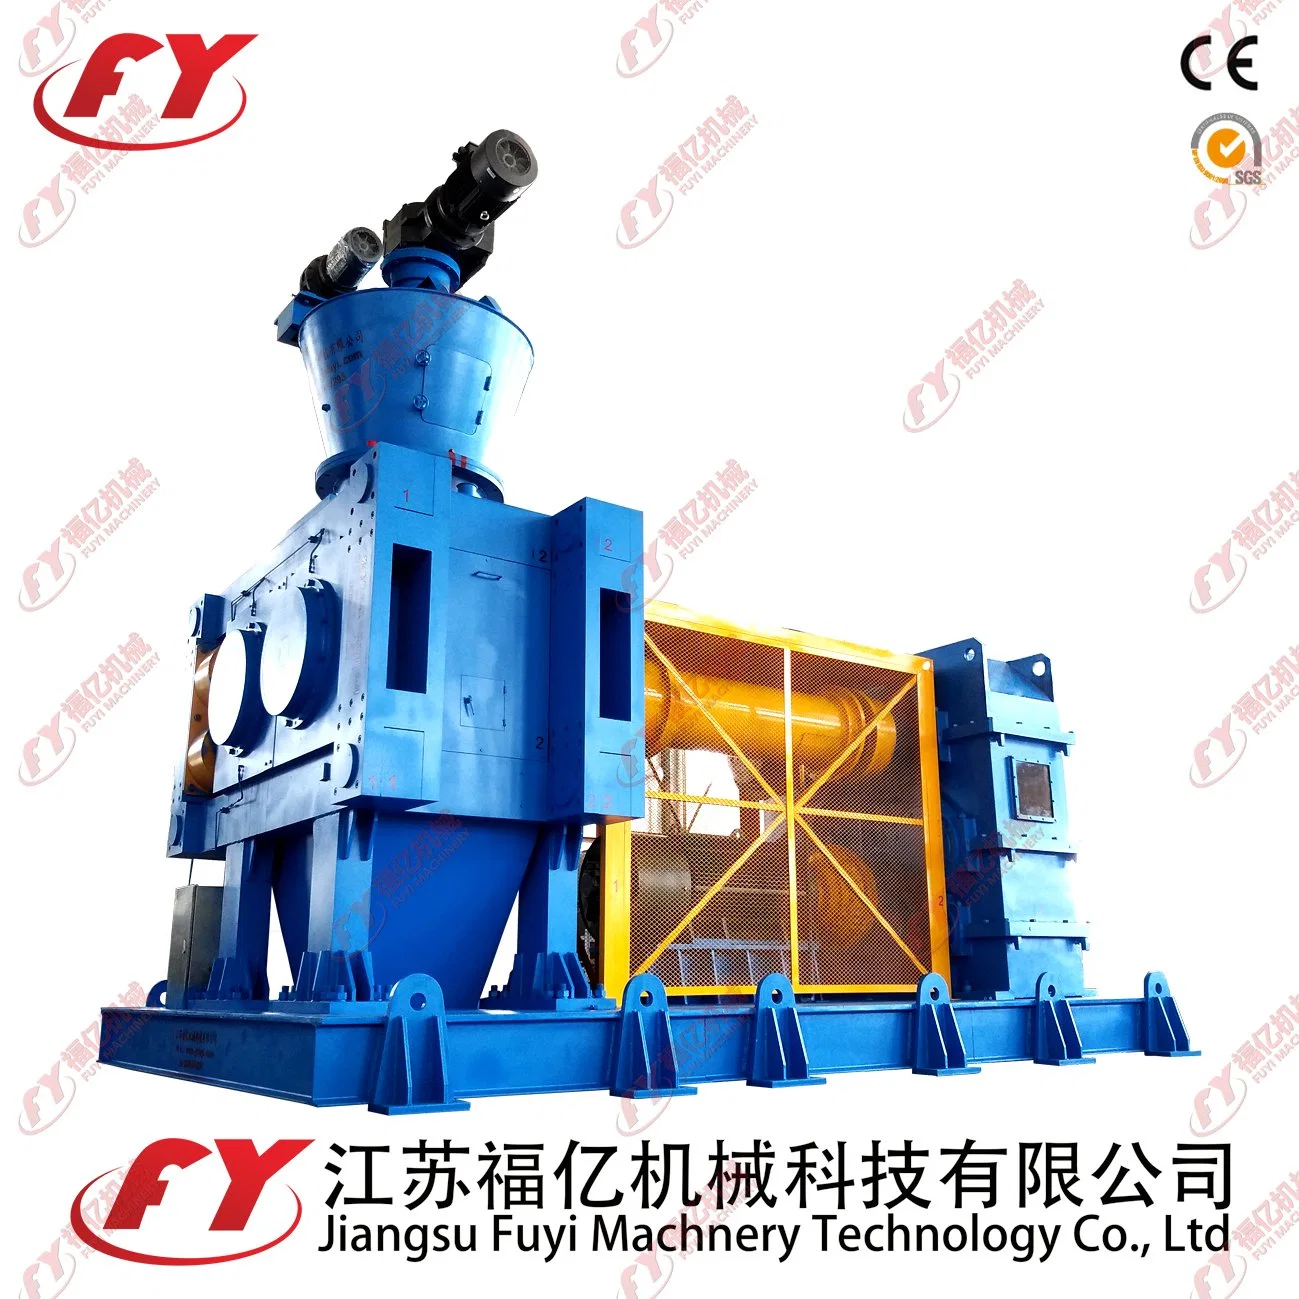 Low Energy Consumption Compact Structure Powder Metallurgy Press Machine